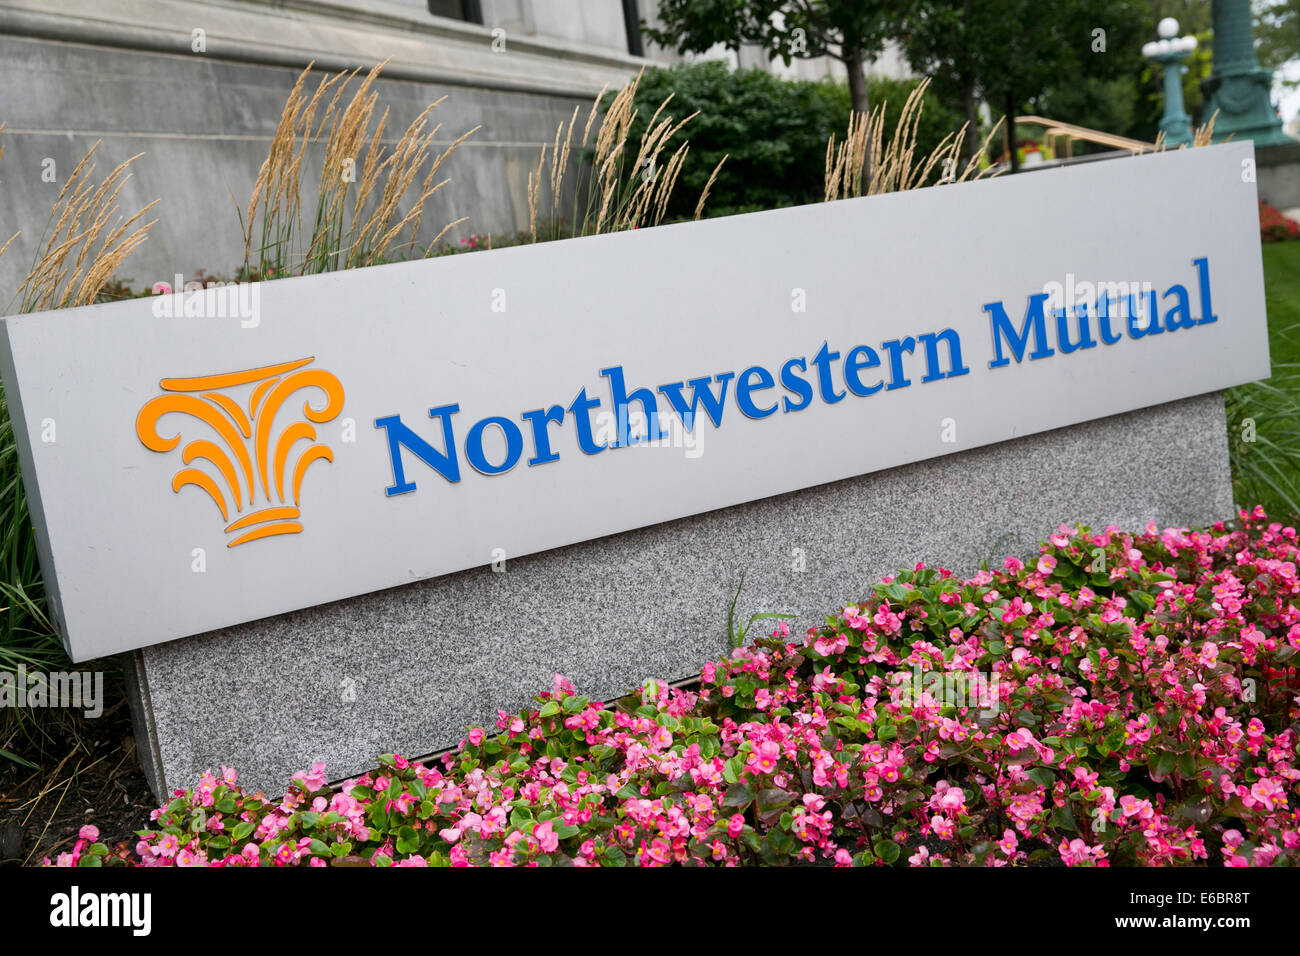 La sede de Northwestern Mutual en Milwaukee, Wisconsin. Foto de stock